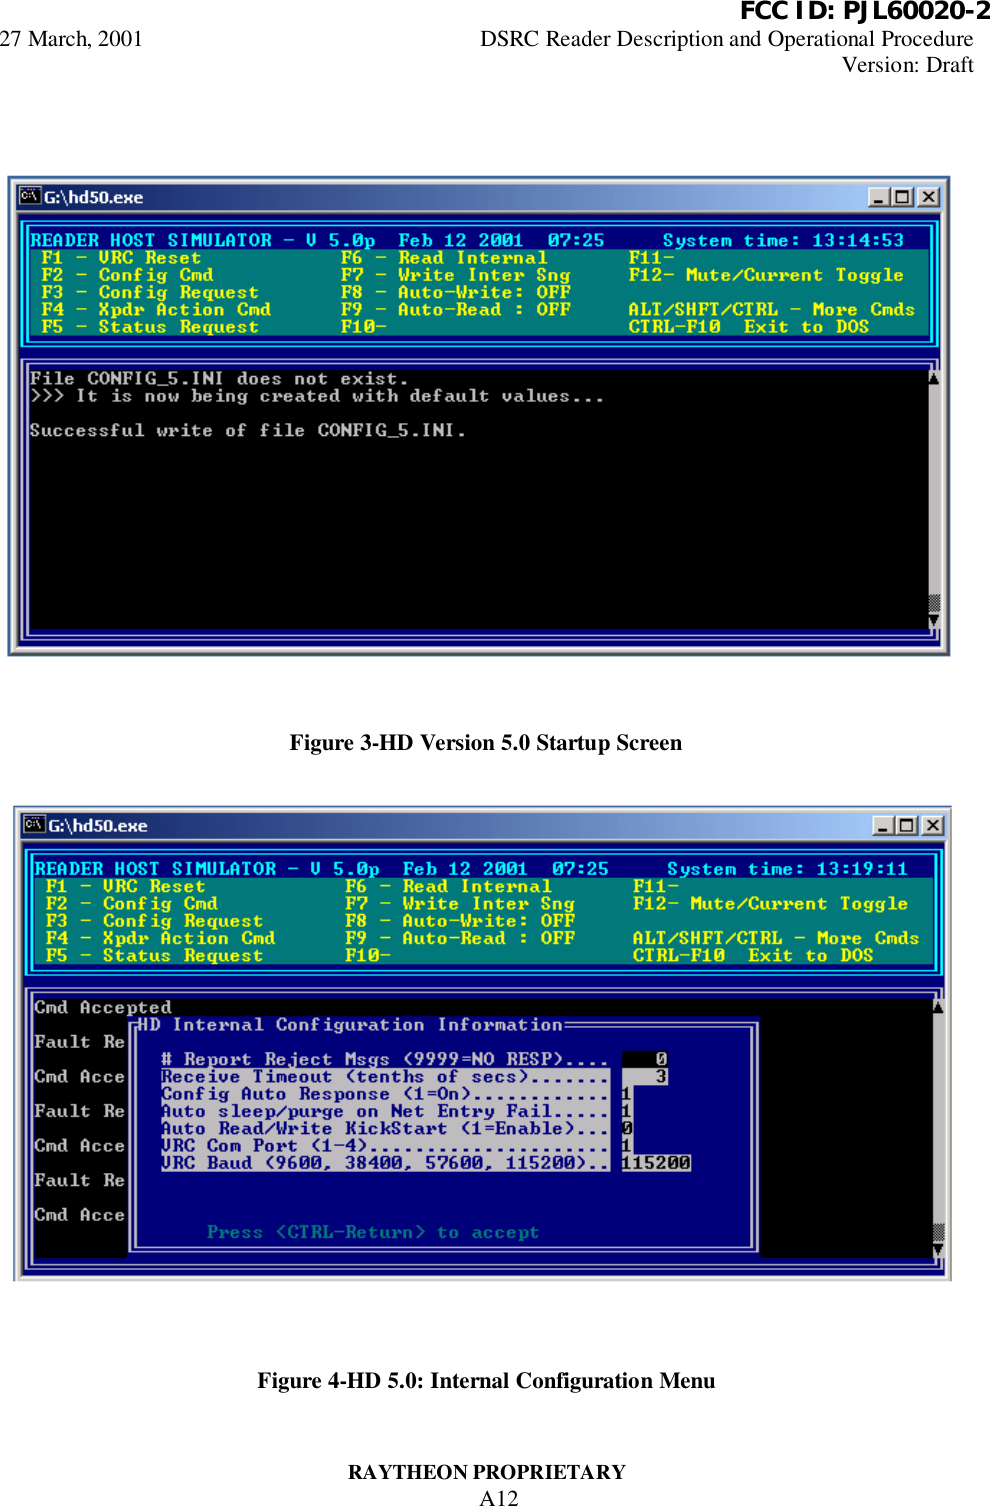          FCC ID: PJL60020-227 March, 2001 DSRC Reader Description and Operational ProcedureVersion: DraftRAYTHEON PROPRIETARYA12Figure 3-HD Version 5.0 Startup ScreenFigure 4-HD 5.0: Internal Configuration Menu